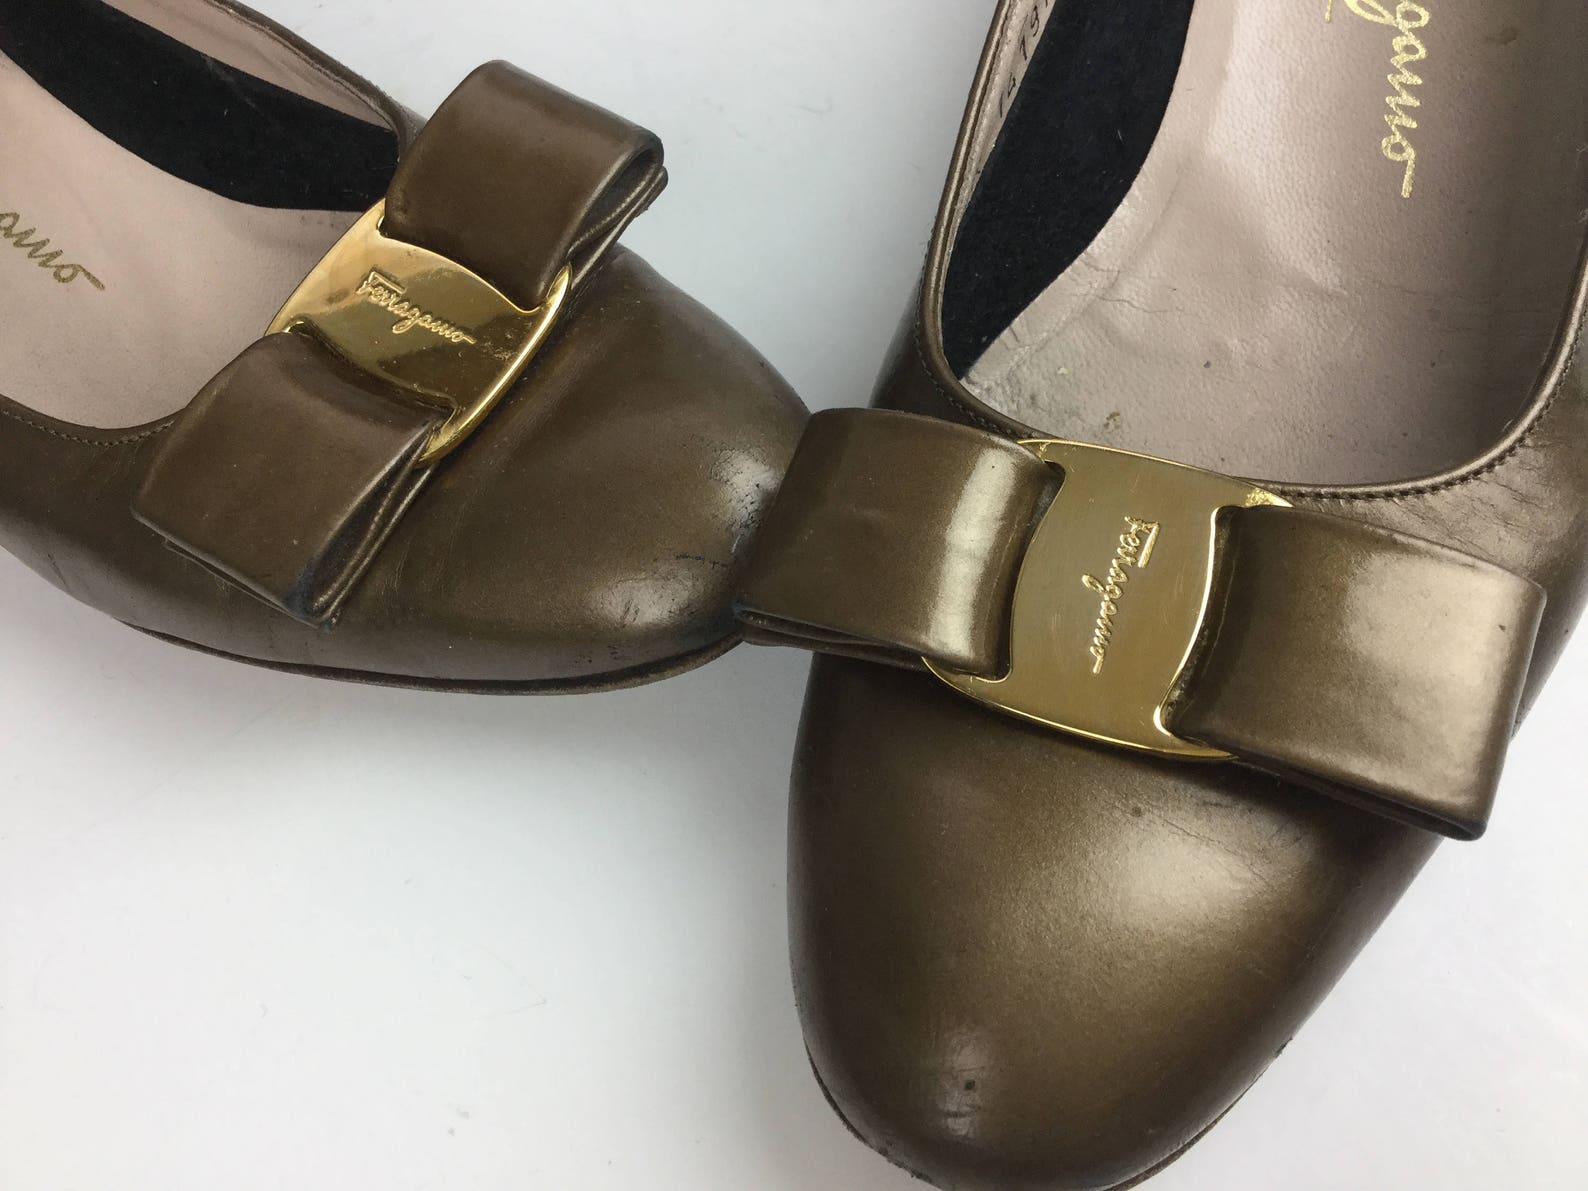 size ferragamo 7.5 shoes pewter gold bronze metallic bow vara vintage 7 low heel pump ballet flat designer